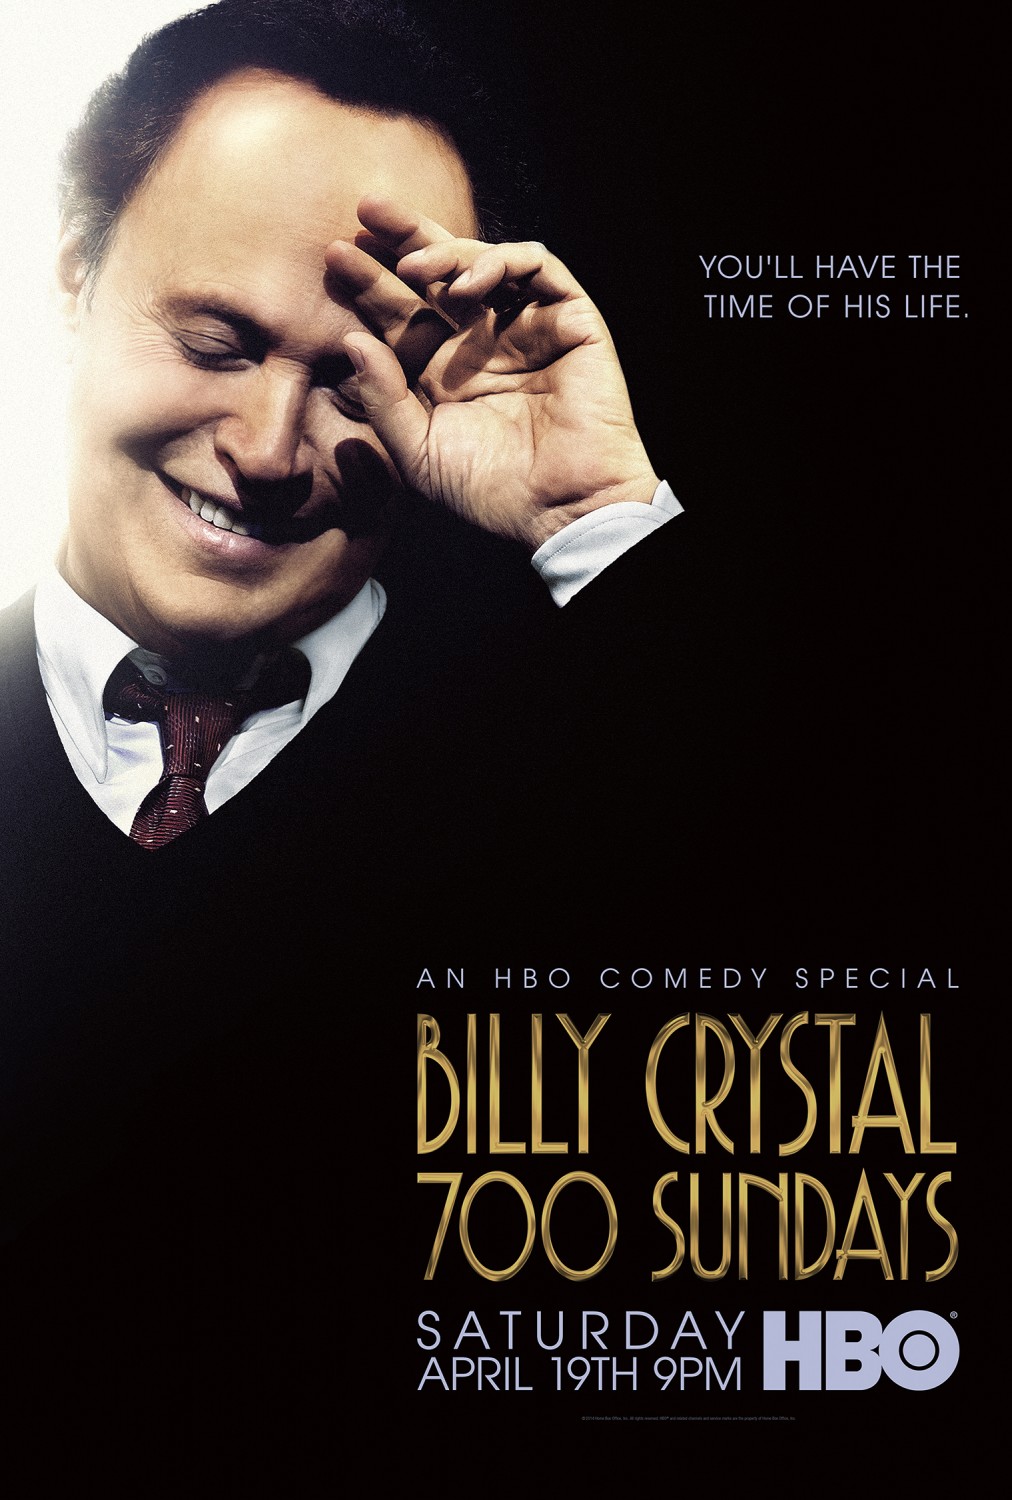 Extra Large TV Poster Image for 700 Sundays 